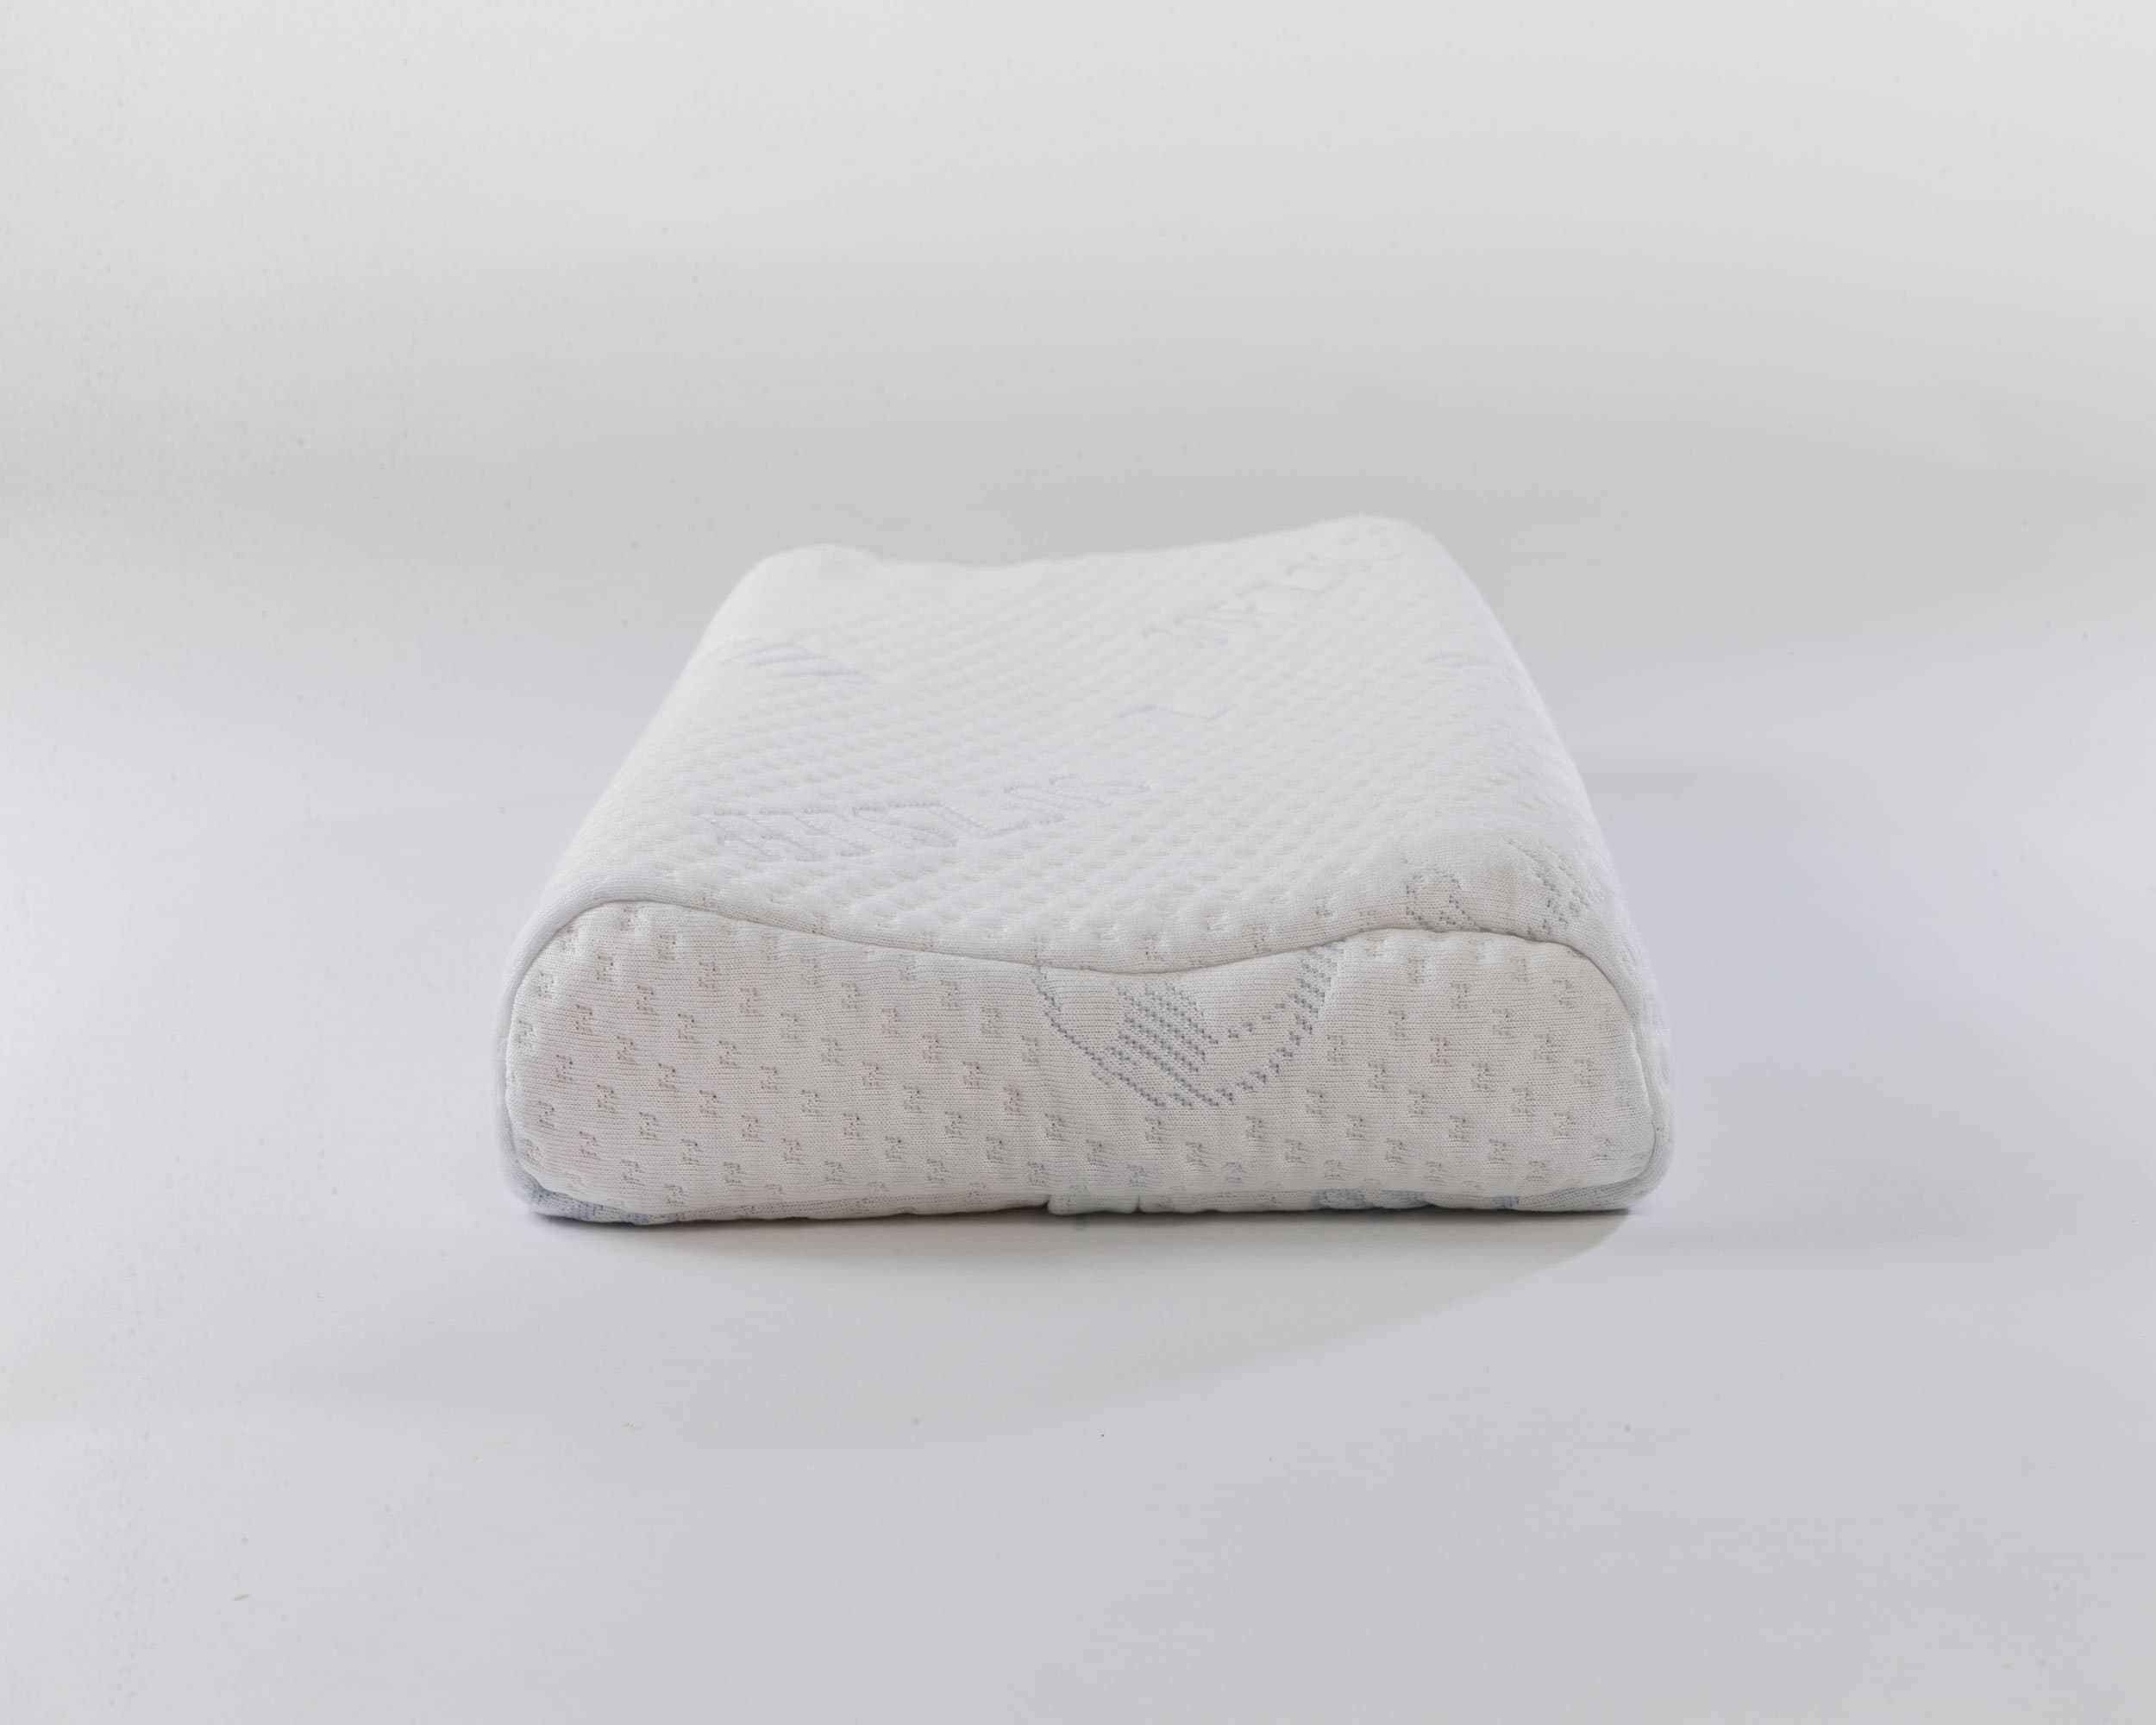 Sofzsleep Junior S Latex Pillow 2-5yo (L44 x W27 x H6 cm)